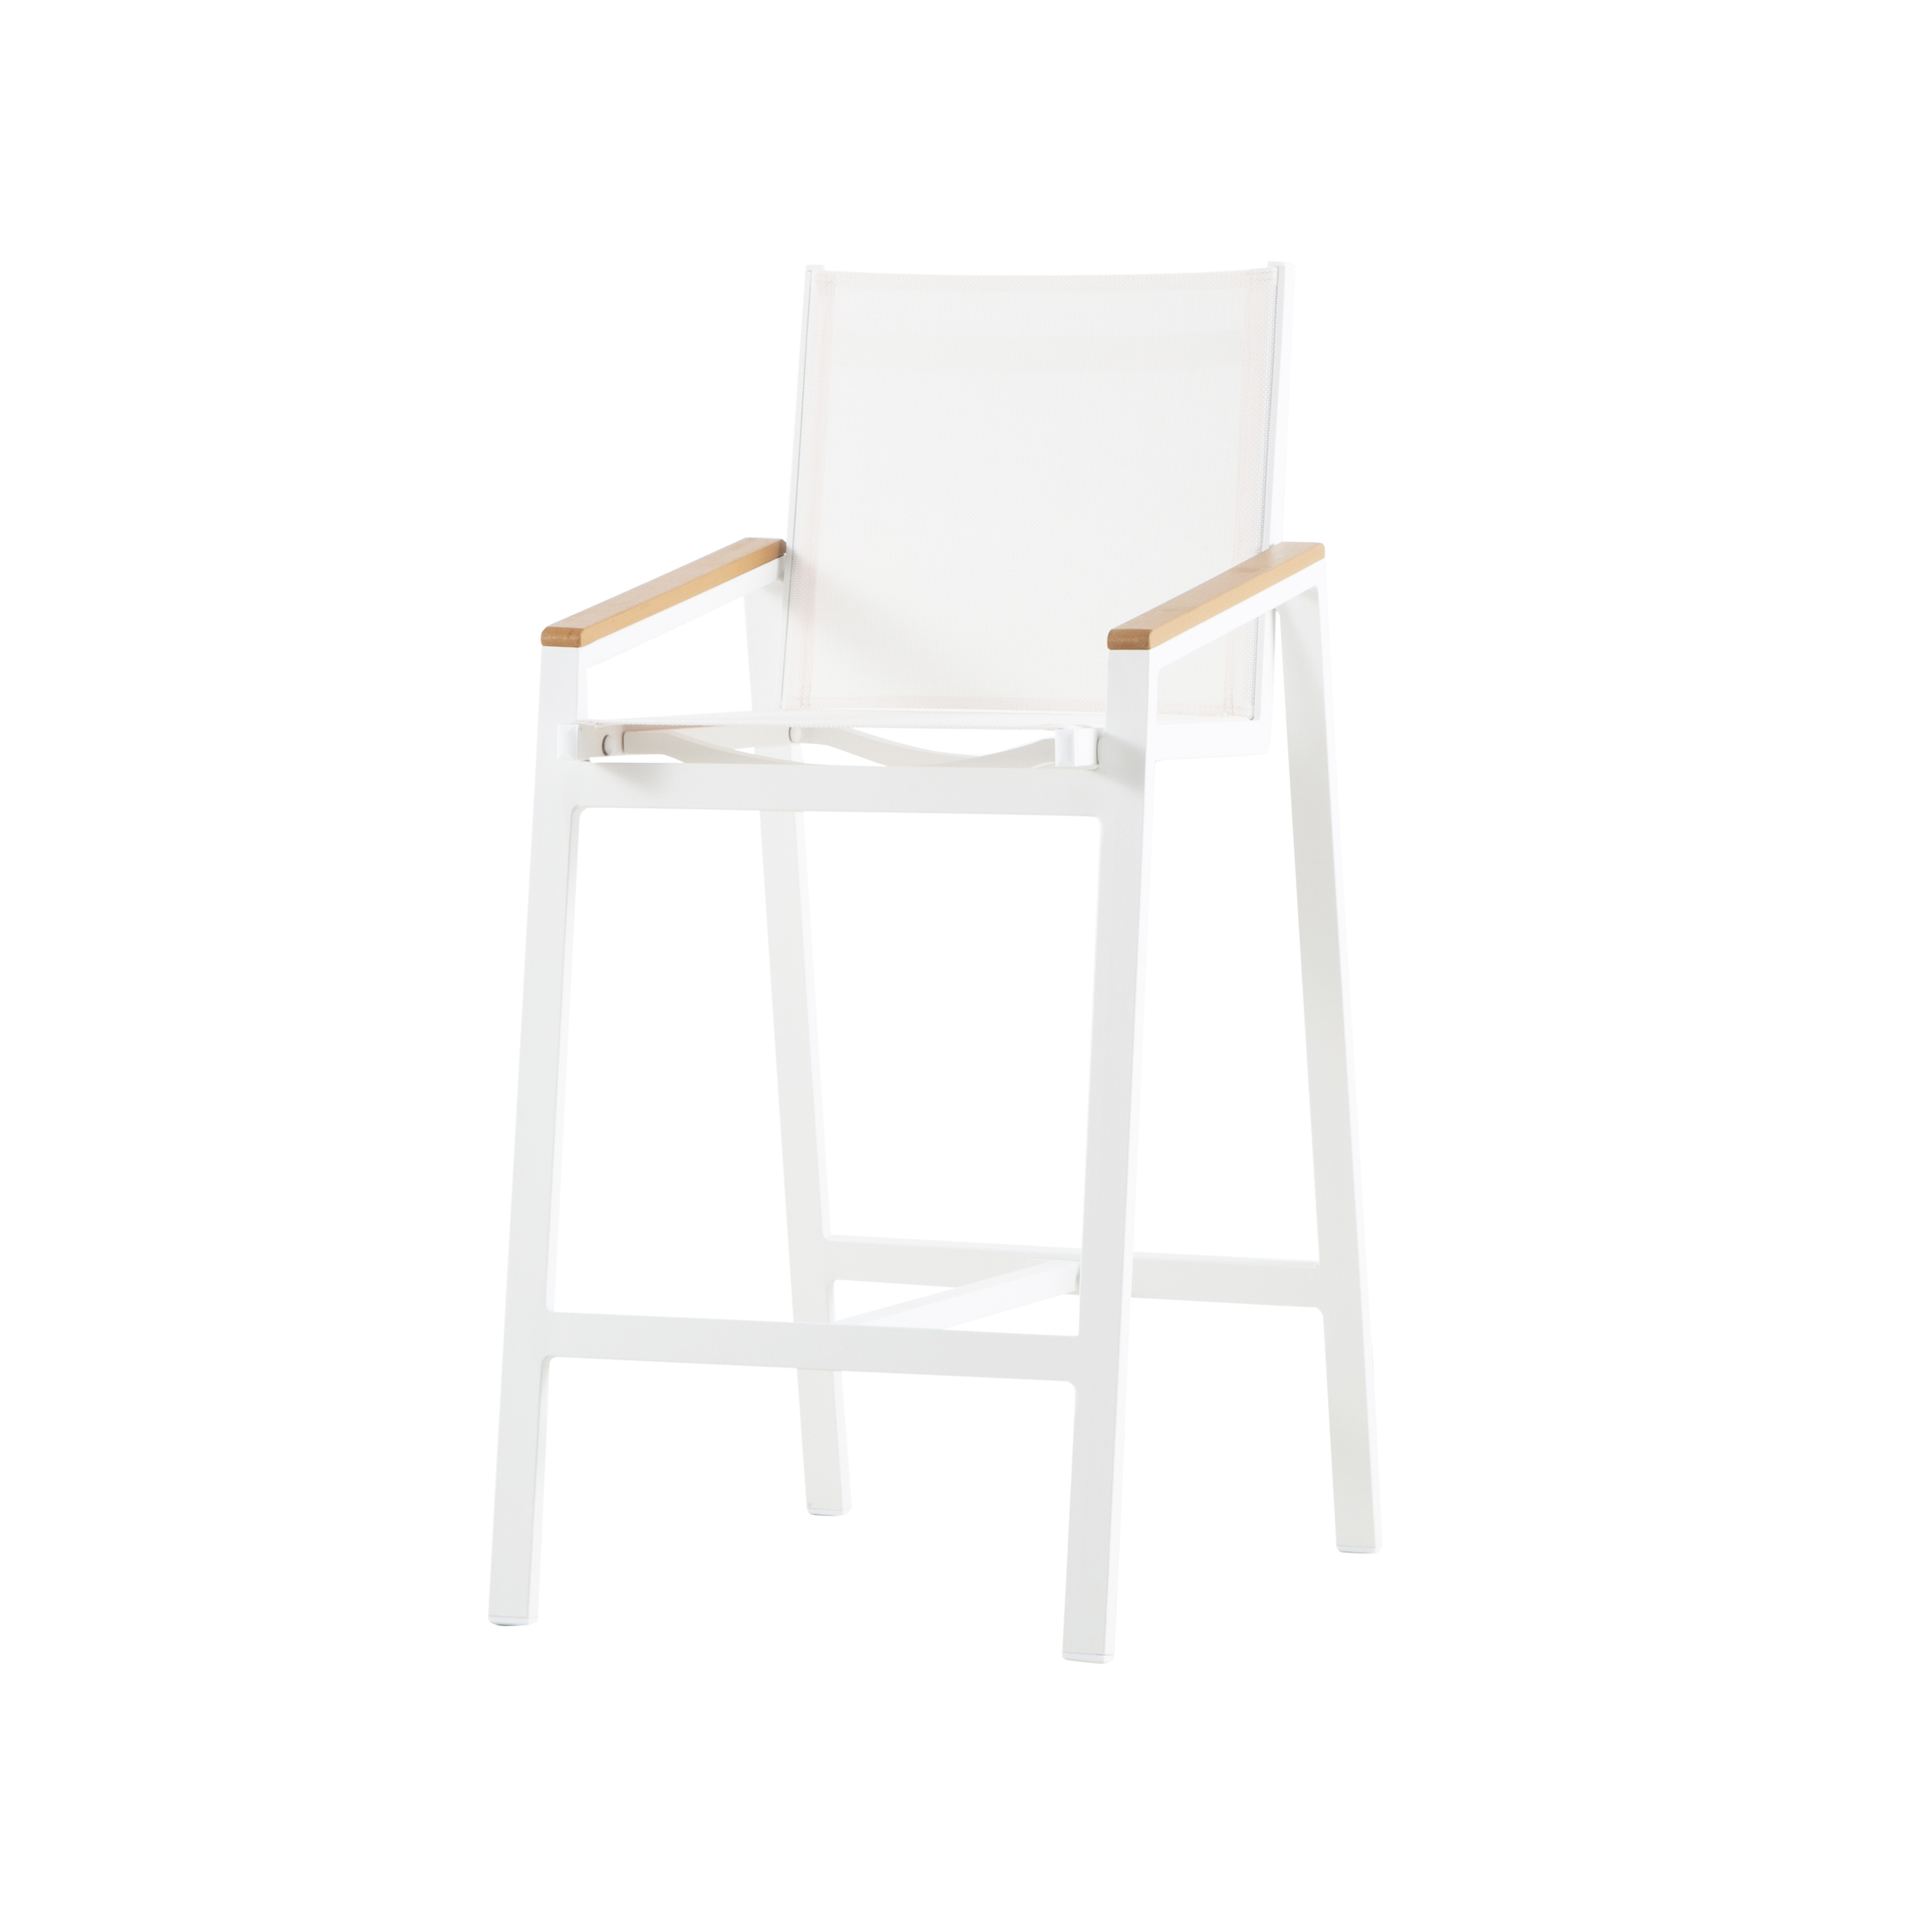 Snow White textile bar stool Featured Image